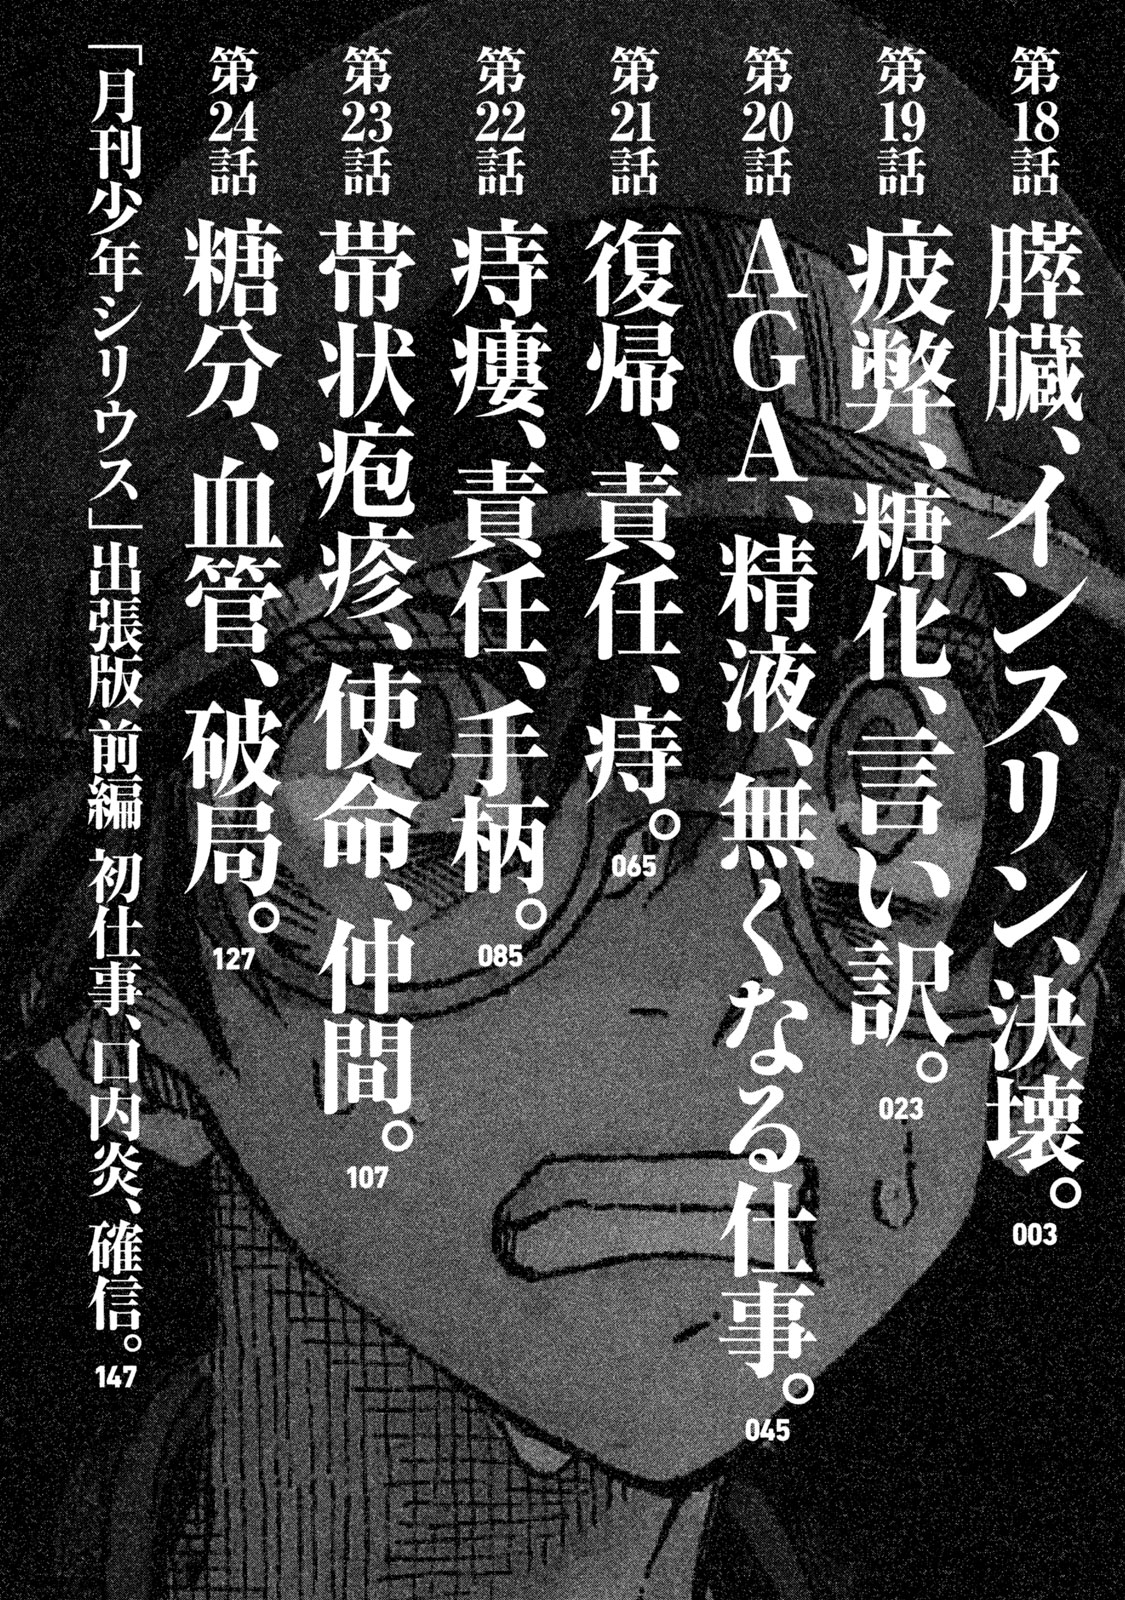 Hataraku Saibou BLACK - Chapter 18 - Page 4